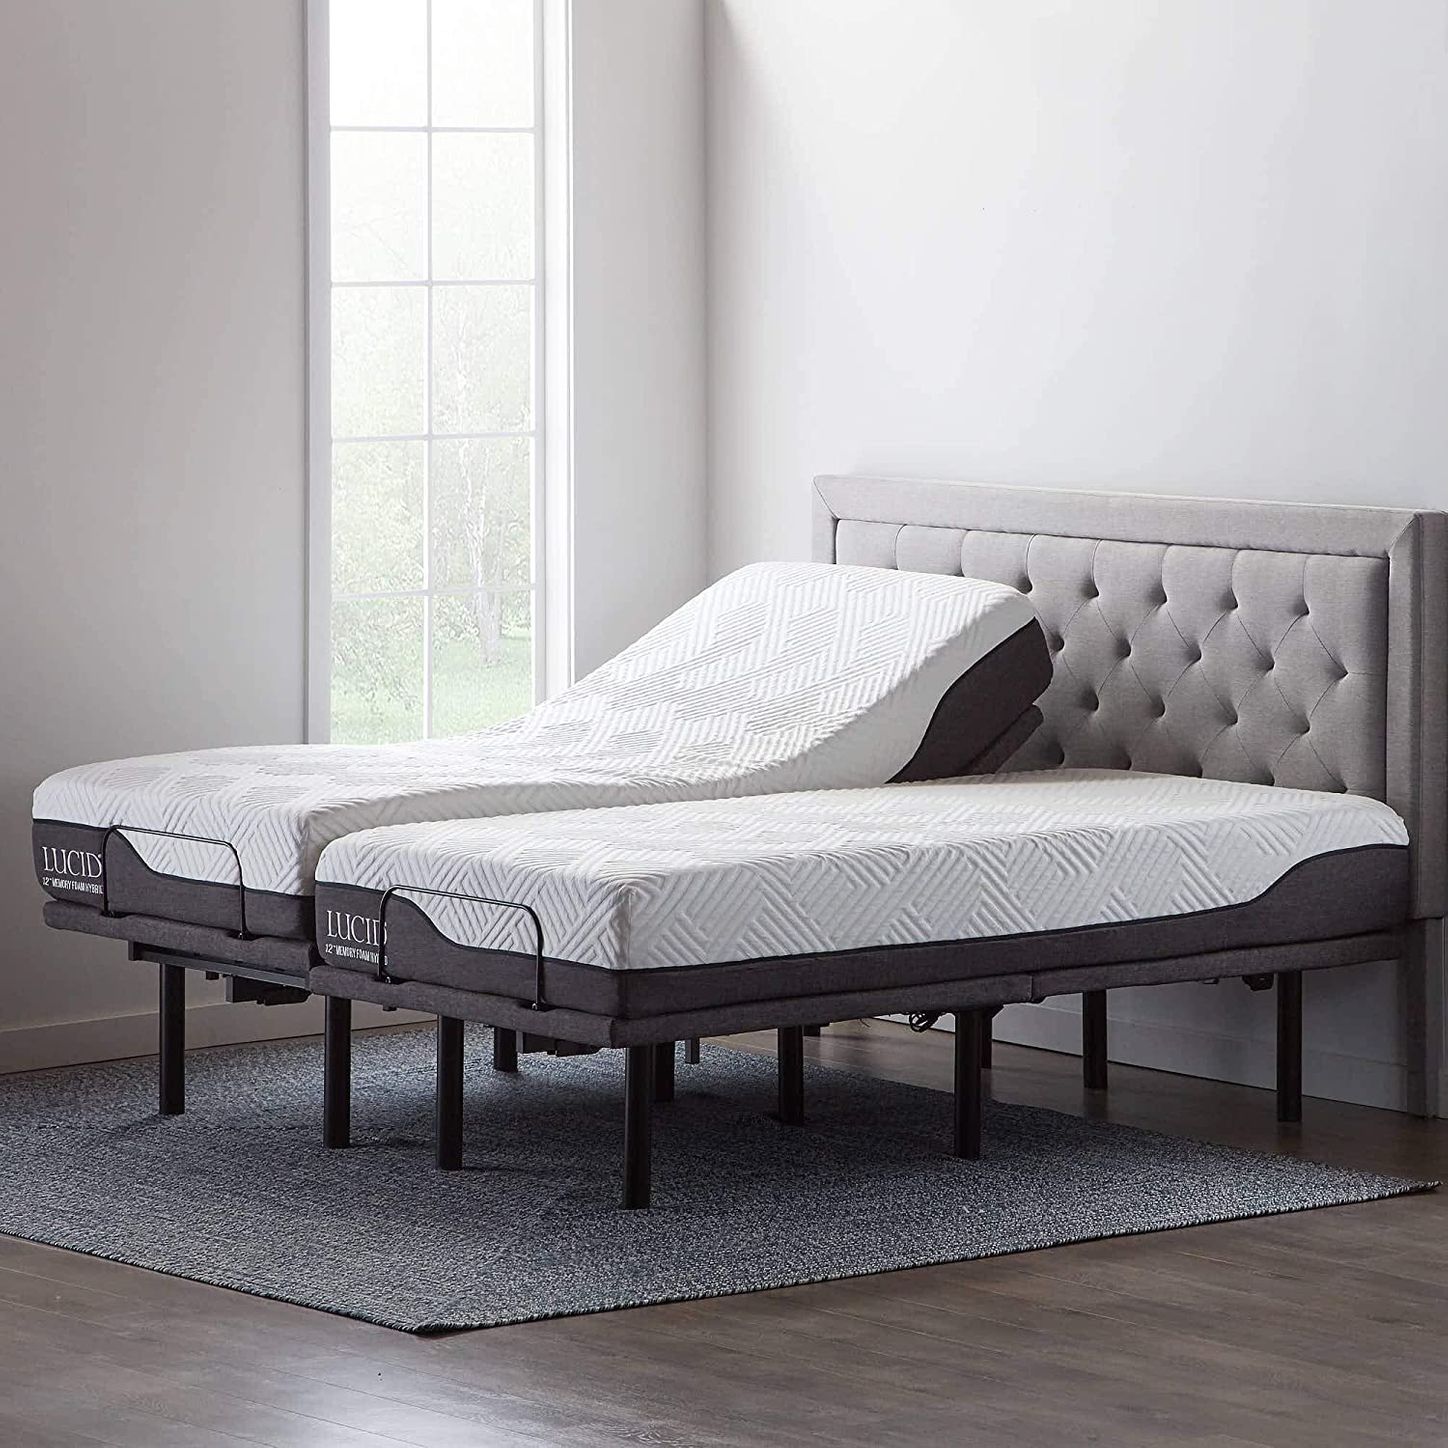 10 Best Adjustable Bed Bases 2021 The, Electric Bed Frame King